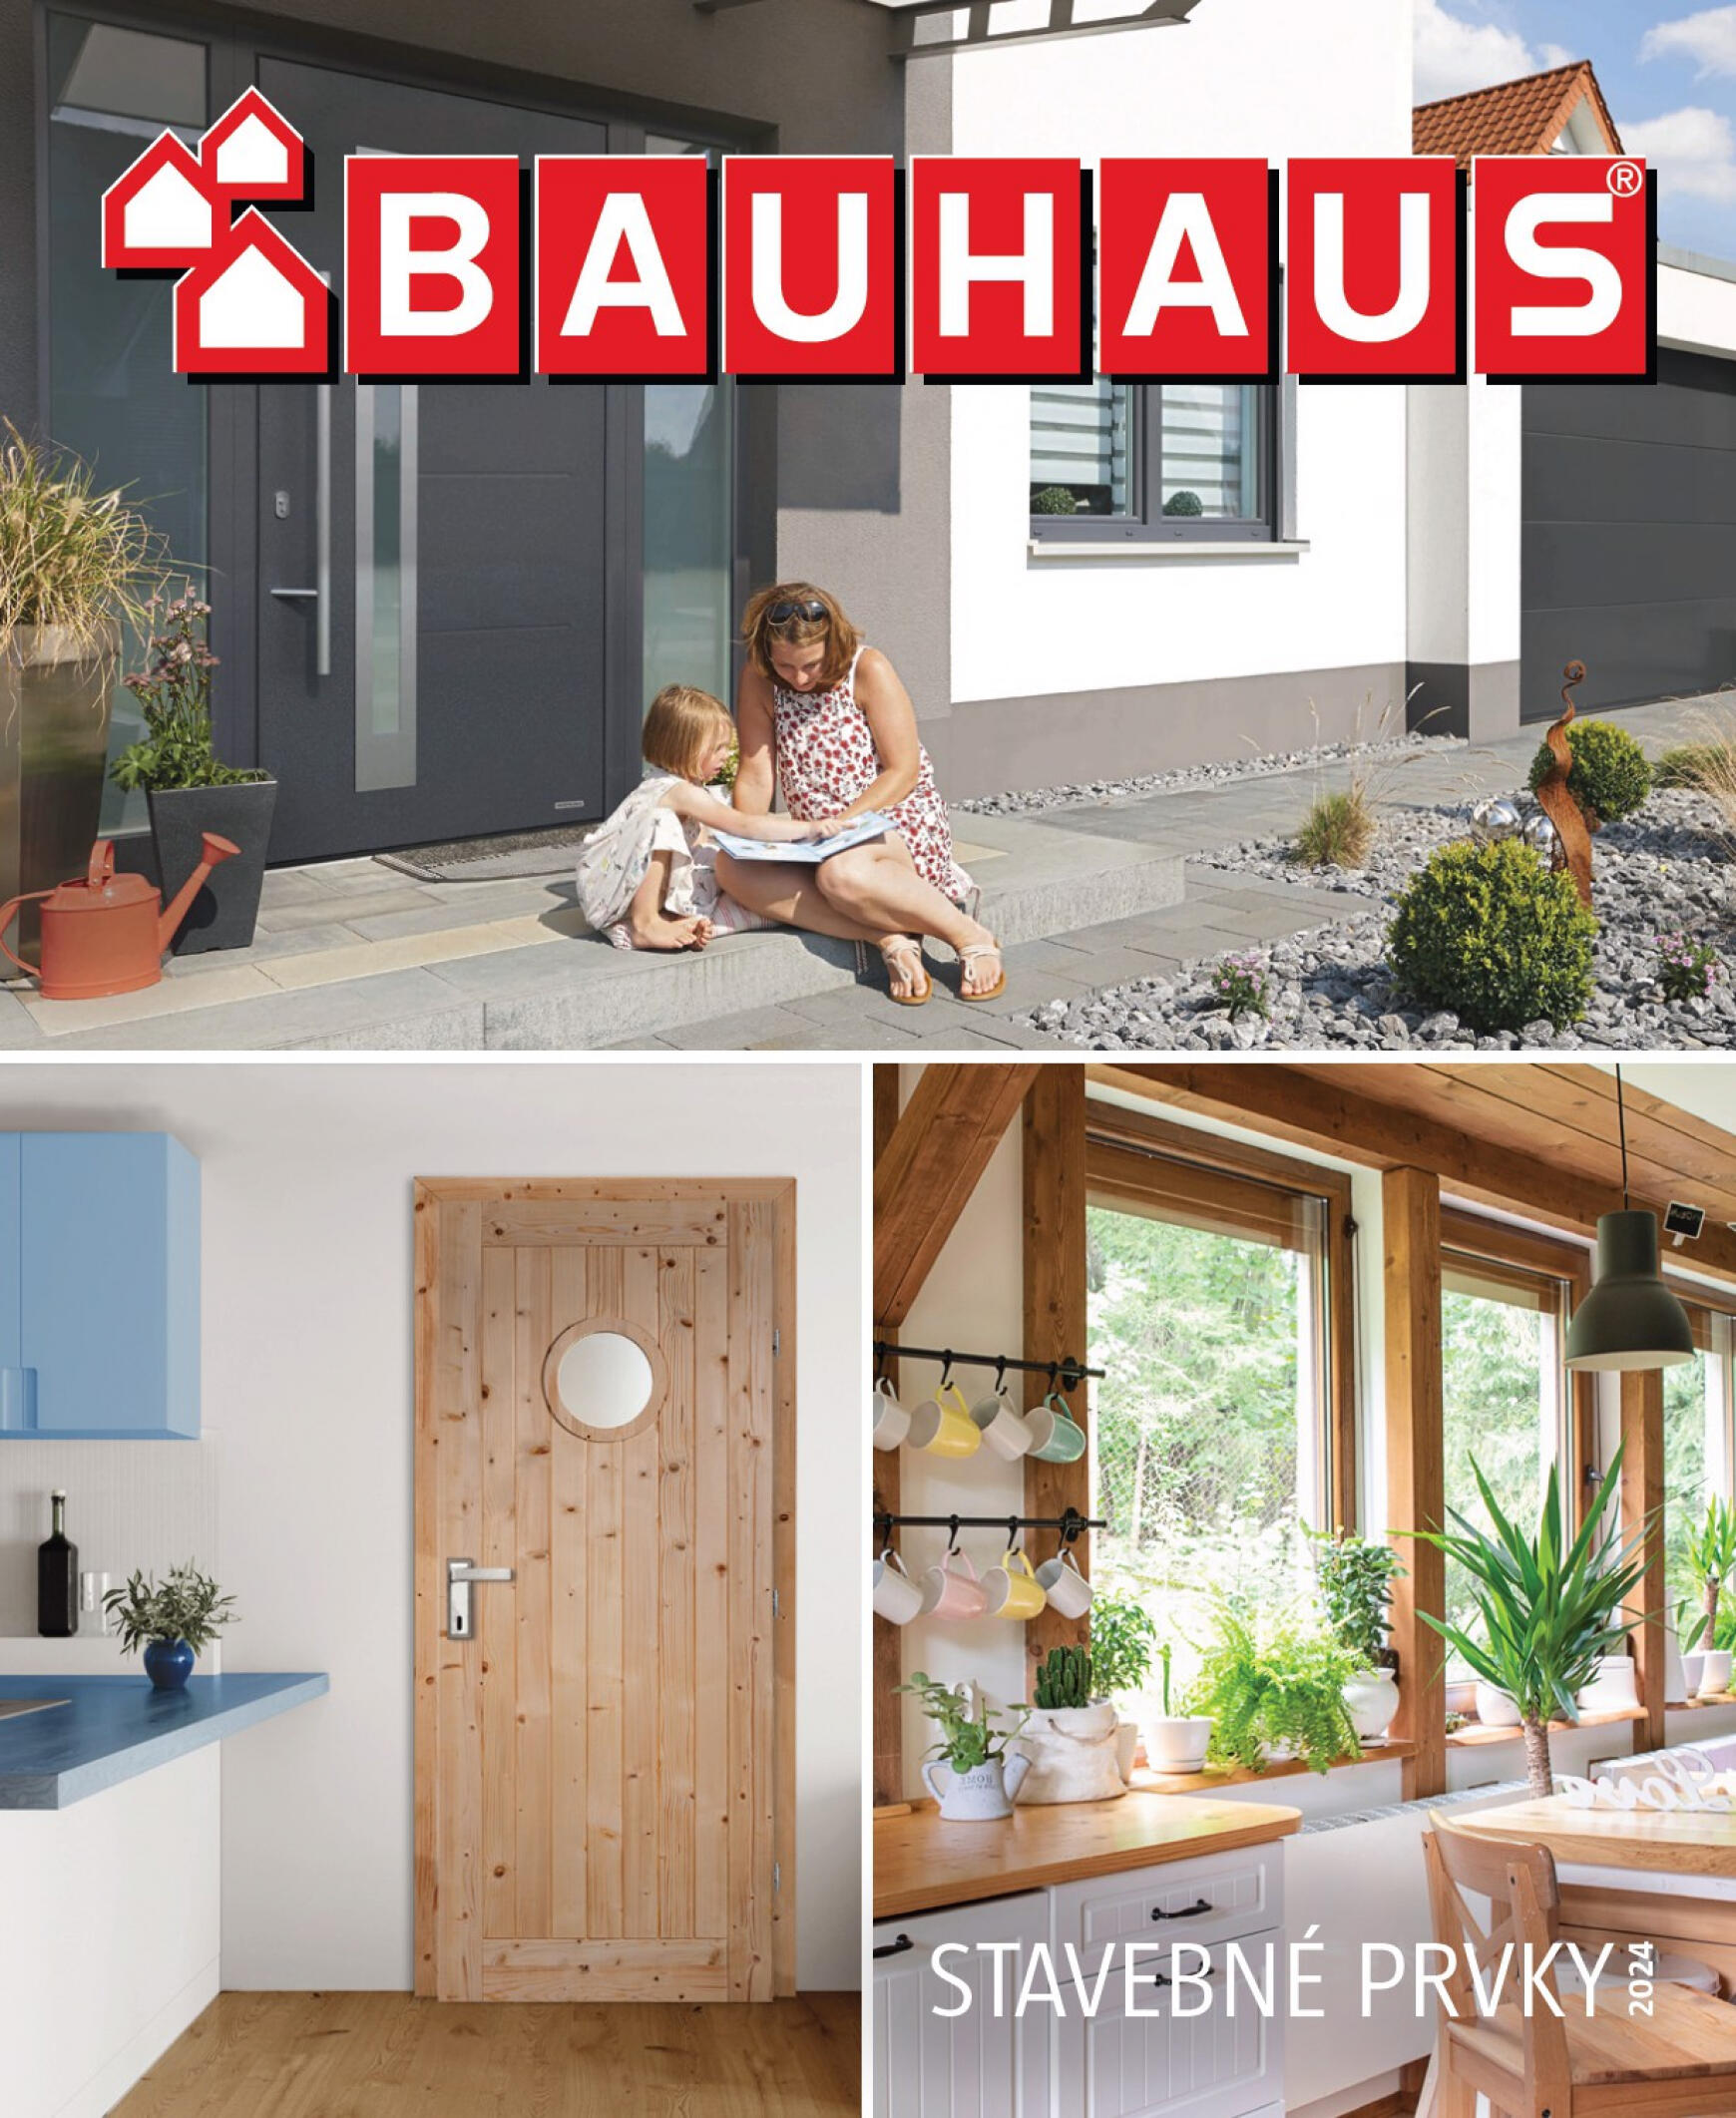 bauhaus - Bauhaus - Stavebné prvky leták platný od 16.05. - 31.12.